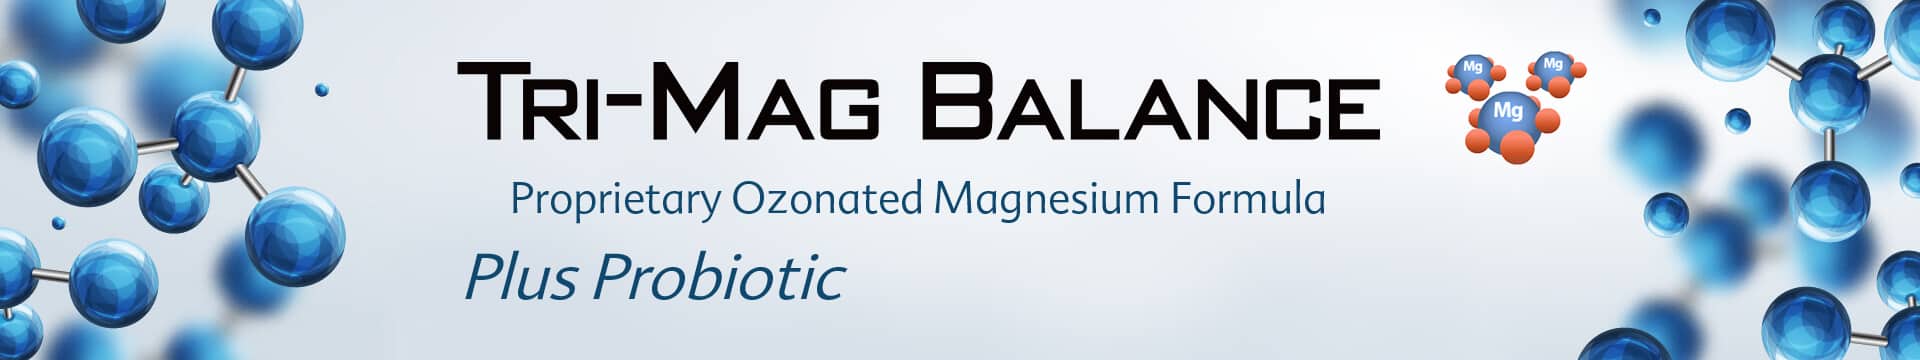 Tri-Mag Balance